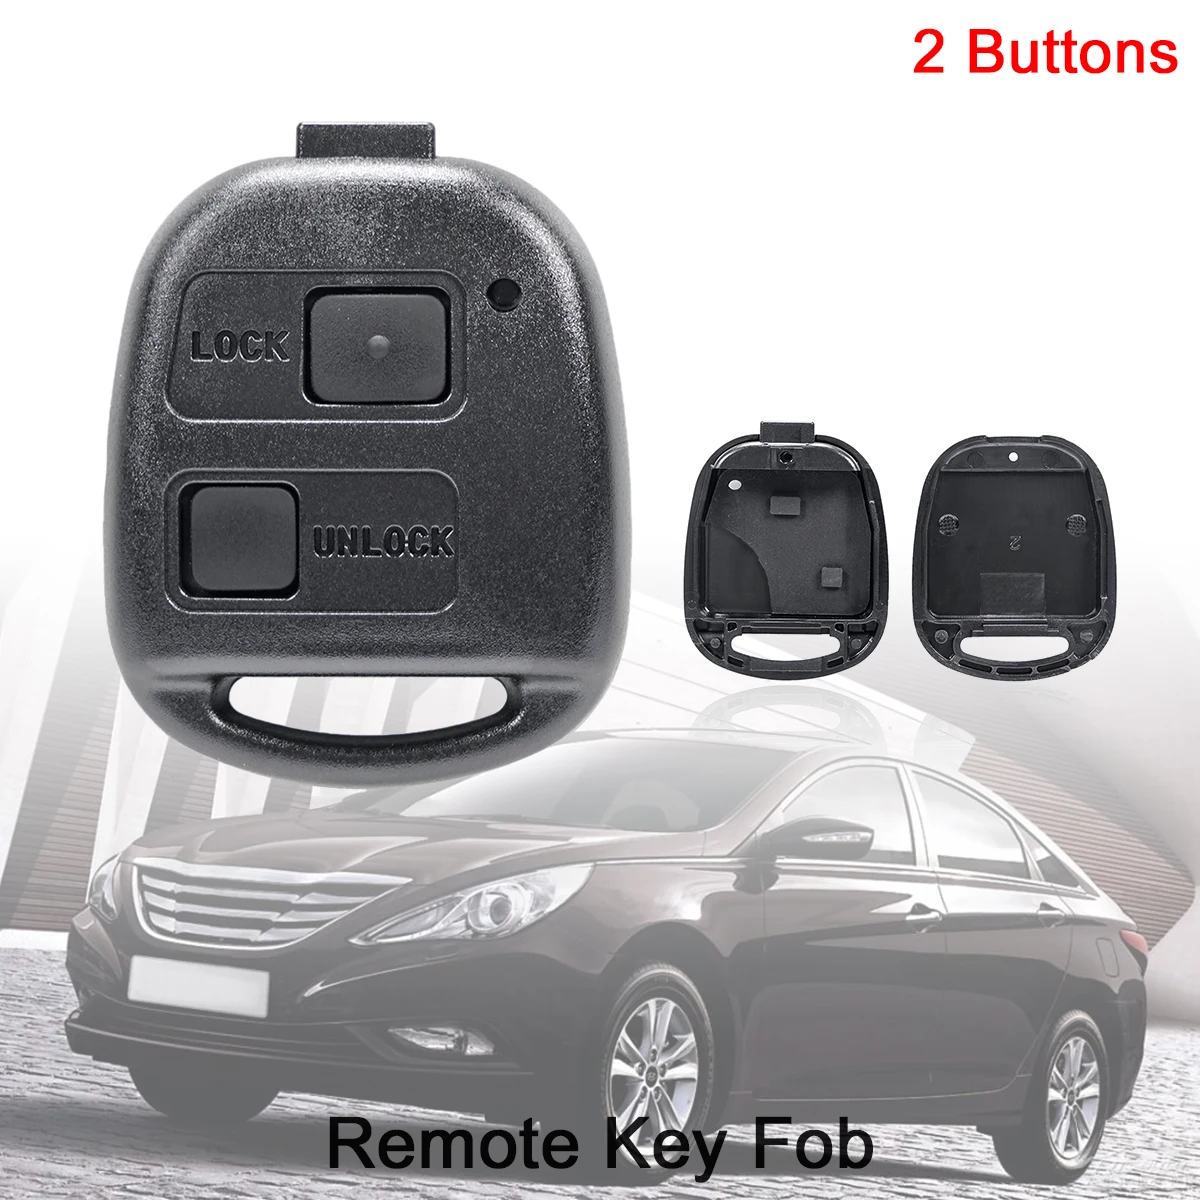 2 Button Remote Car Key Shell Case for Toyota Camry Rav4 Corolla Prado Yaris Tarago Cruiser Land Lexus RX300 ES300 LS400 GX